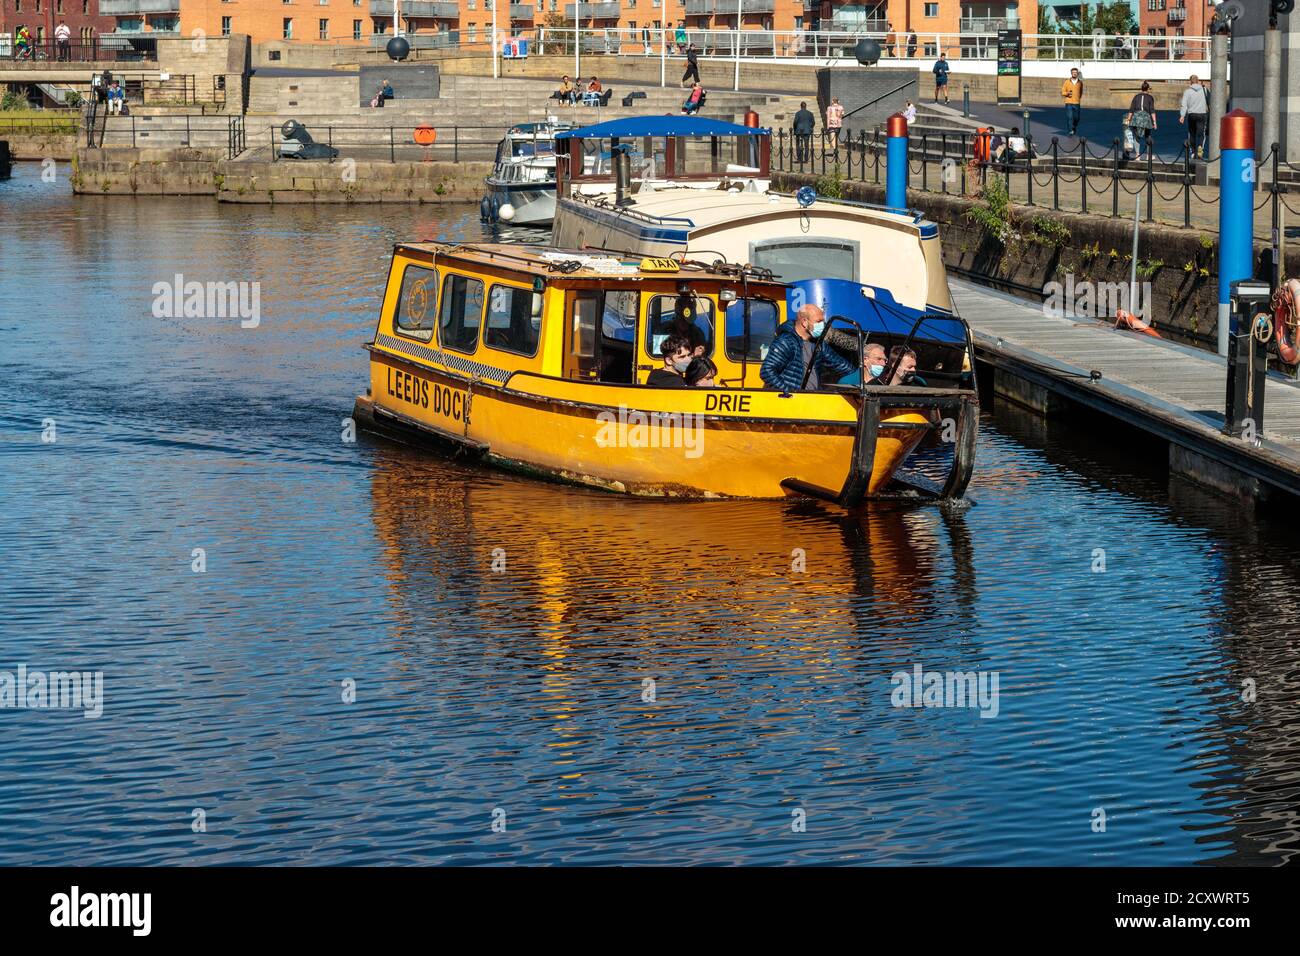 View of Leeds Dock water taxi Drie in Clarence Dock, Leeds Stock Photo